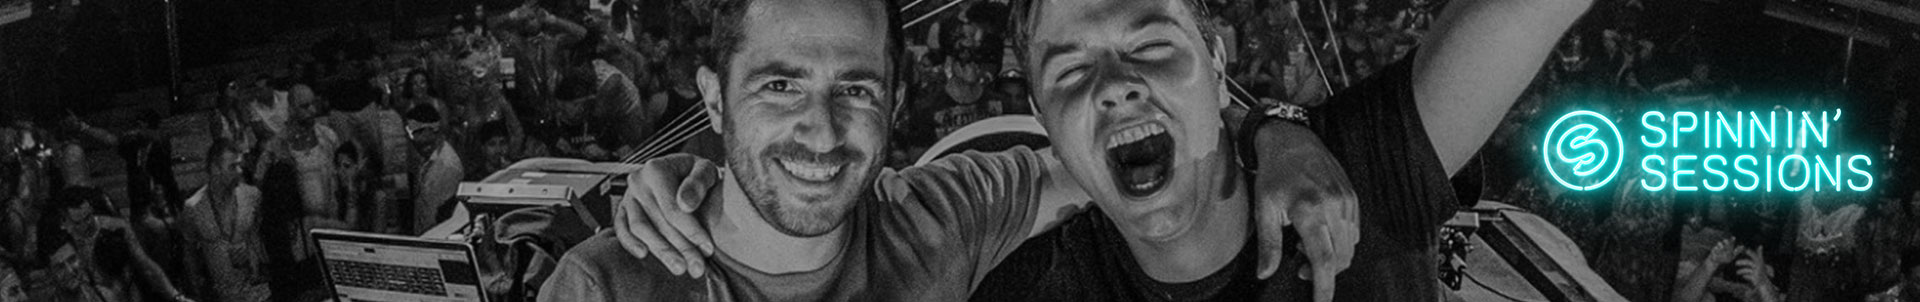 We Rave You premieres Spinnin' Sessions radio show with Sam Feldt & Hook N Sling